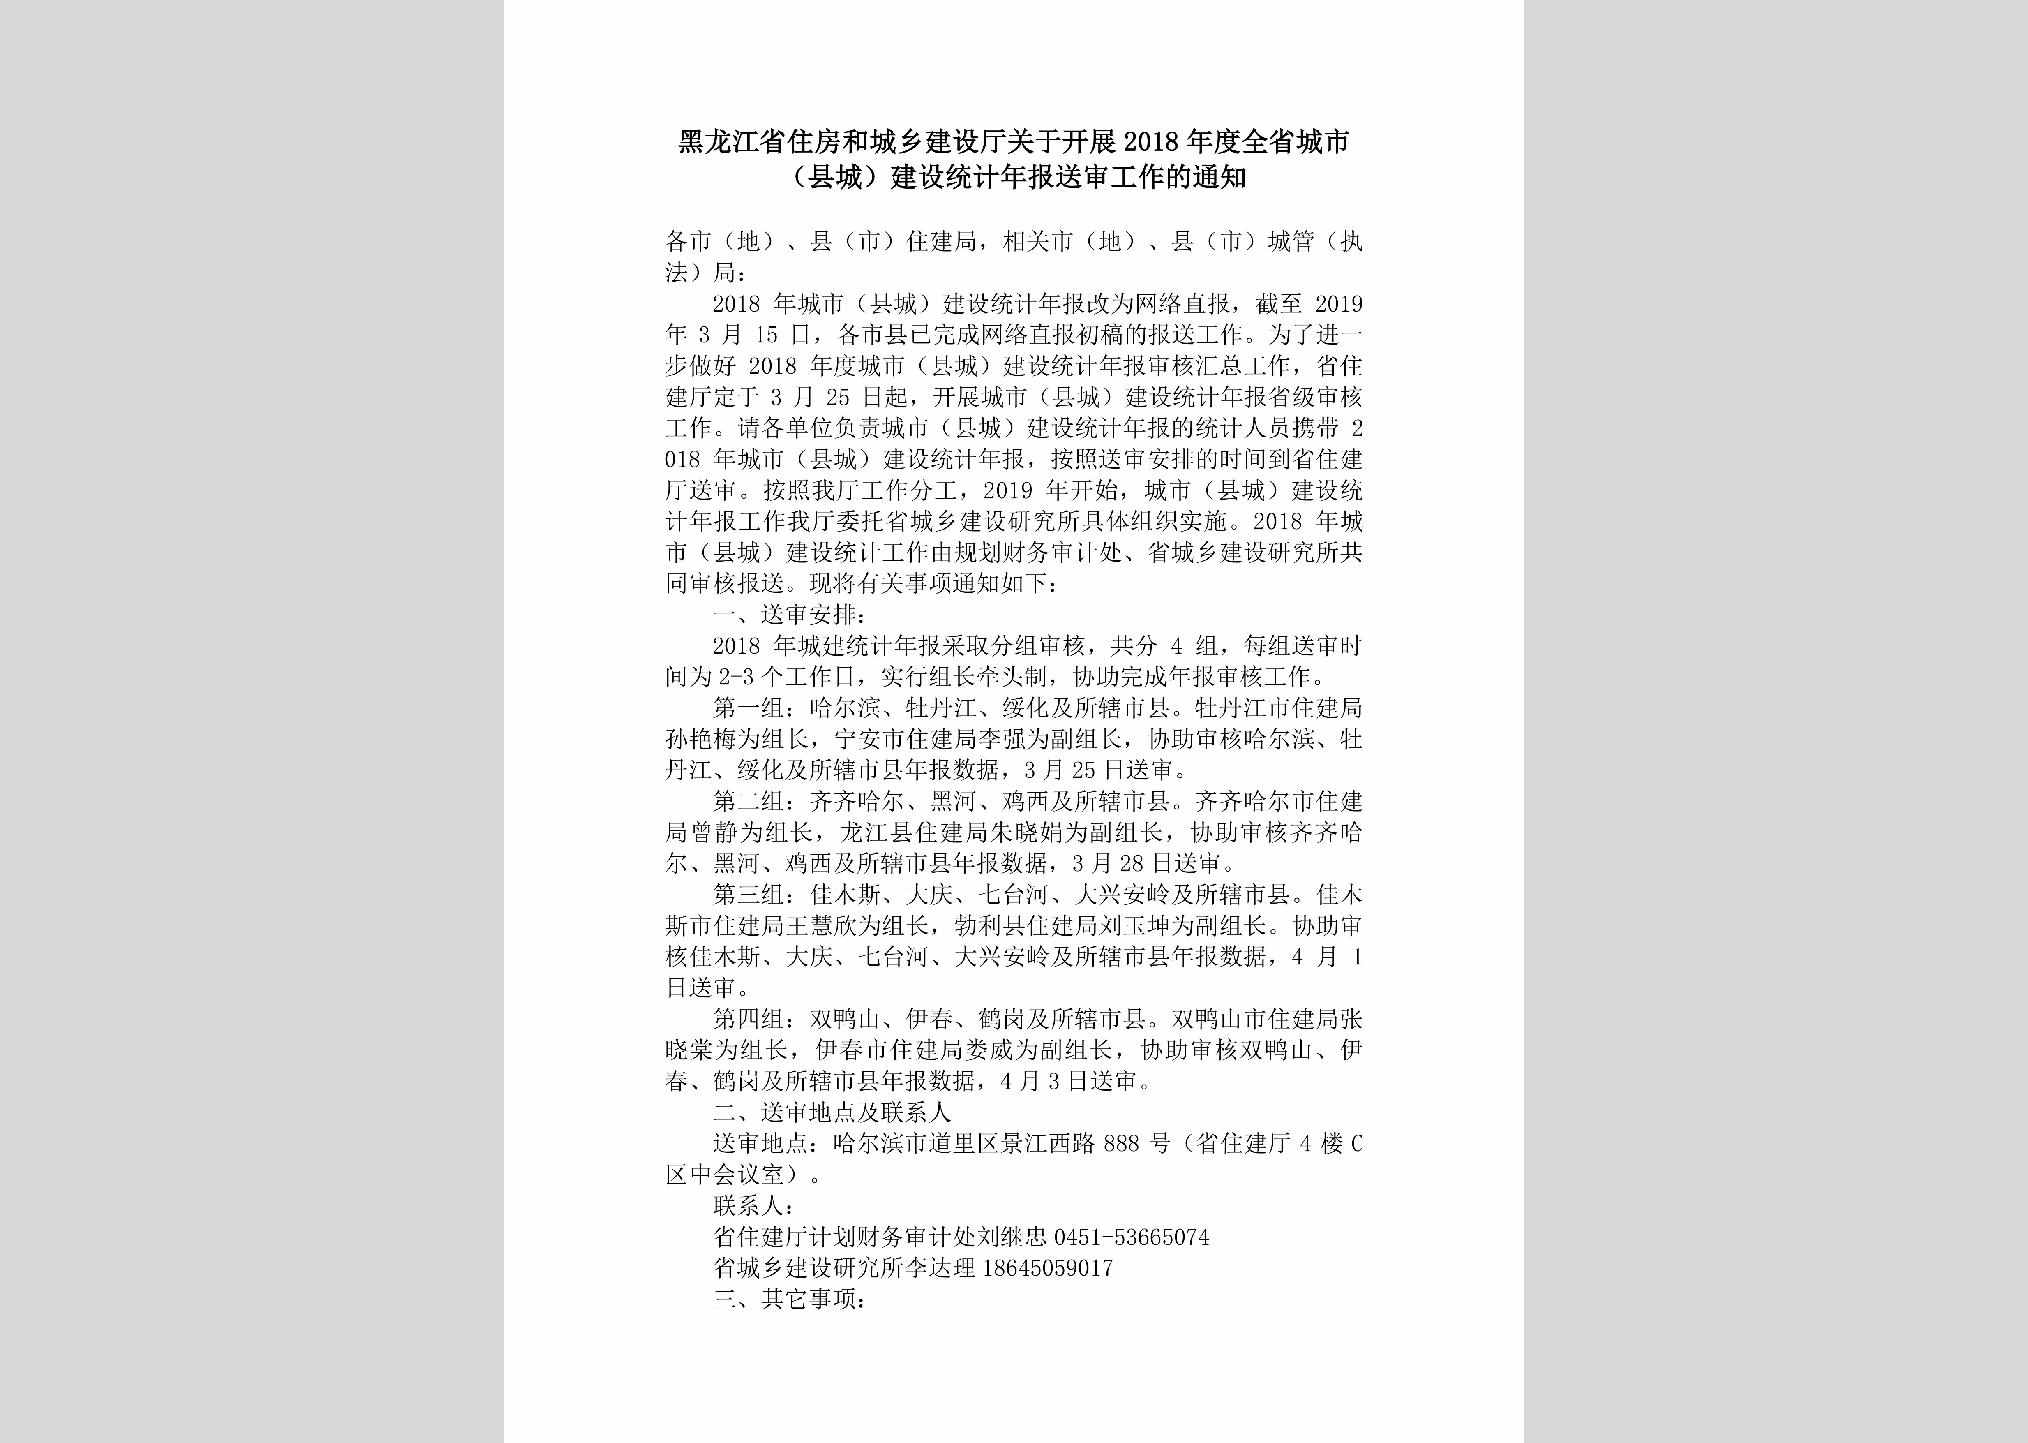 HLJ-QSCSJSTJ-2019：黑龙江省住房和城乡建设厅关于开展2018年度全省城市（县城）建设统计年报送审工作的通知